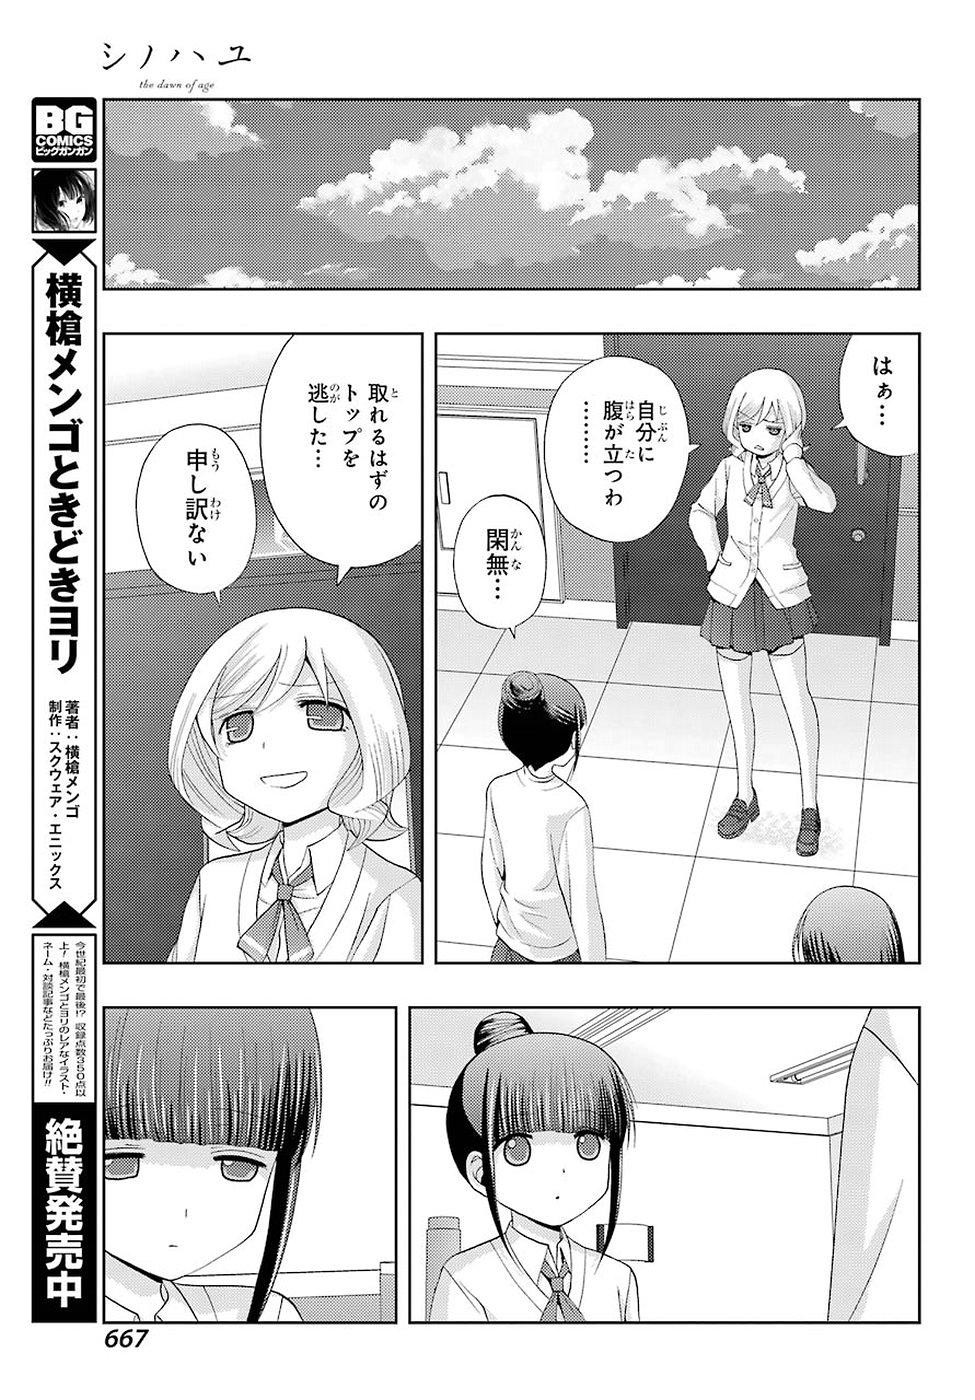 Shinohayu - The Dawn of Age Manga - Chapter 047 - Page 35